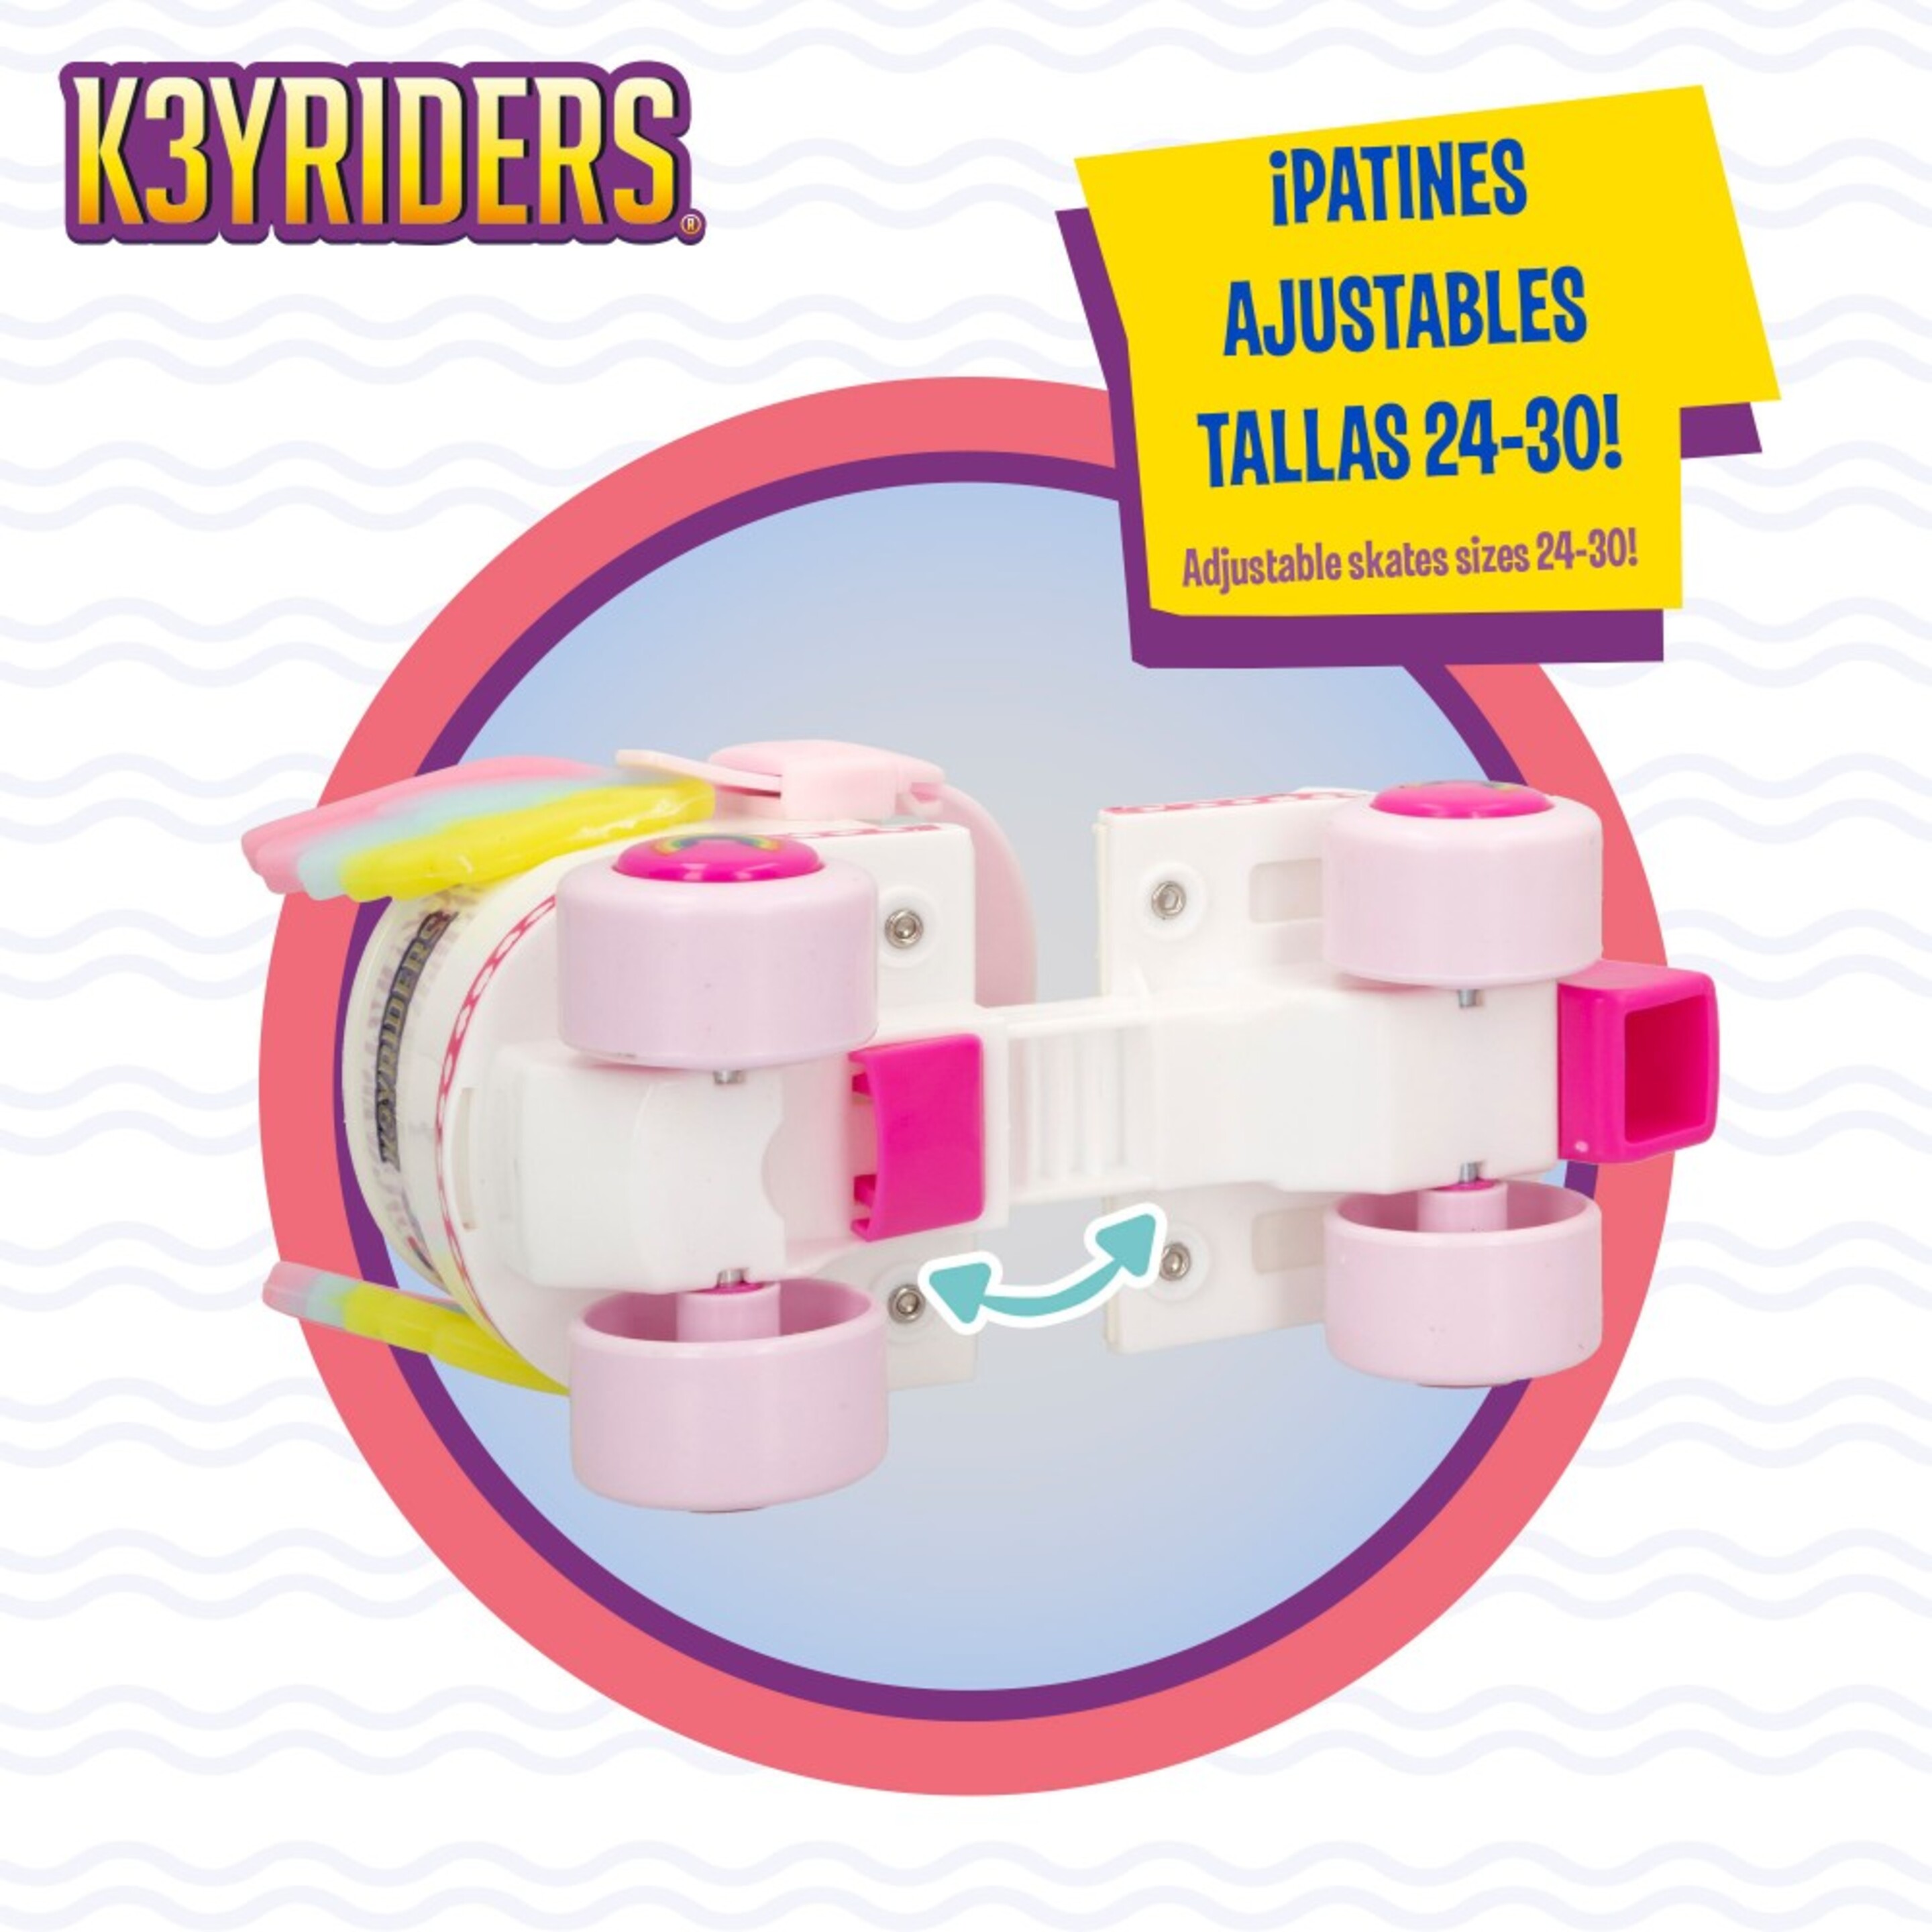 Kit Patines De Unicornio 4 Ruedas K3yriders - Multicolor  MKP